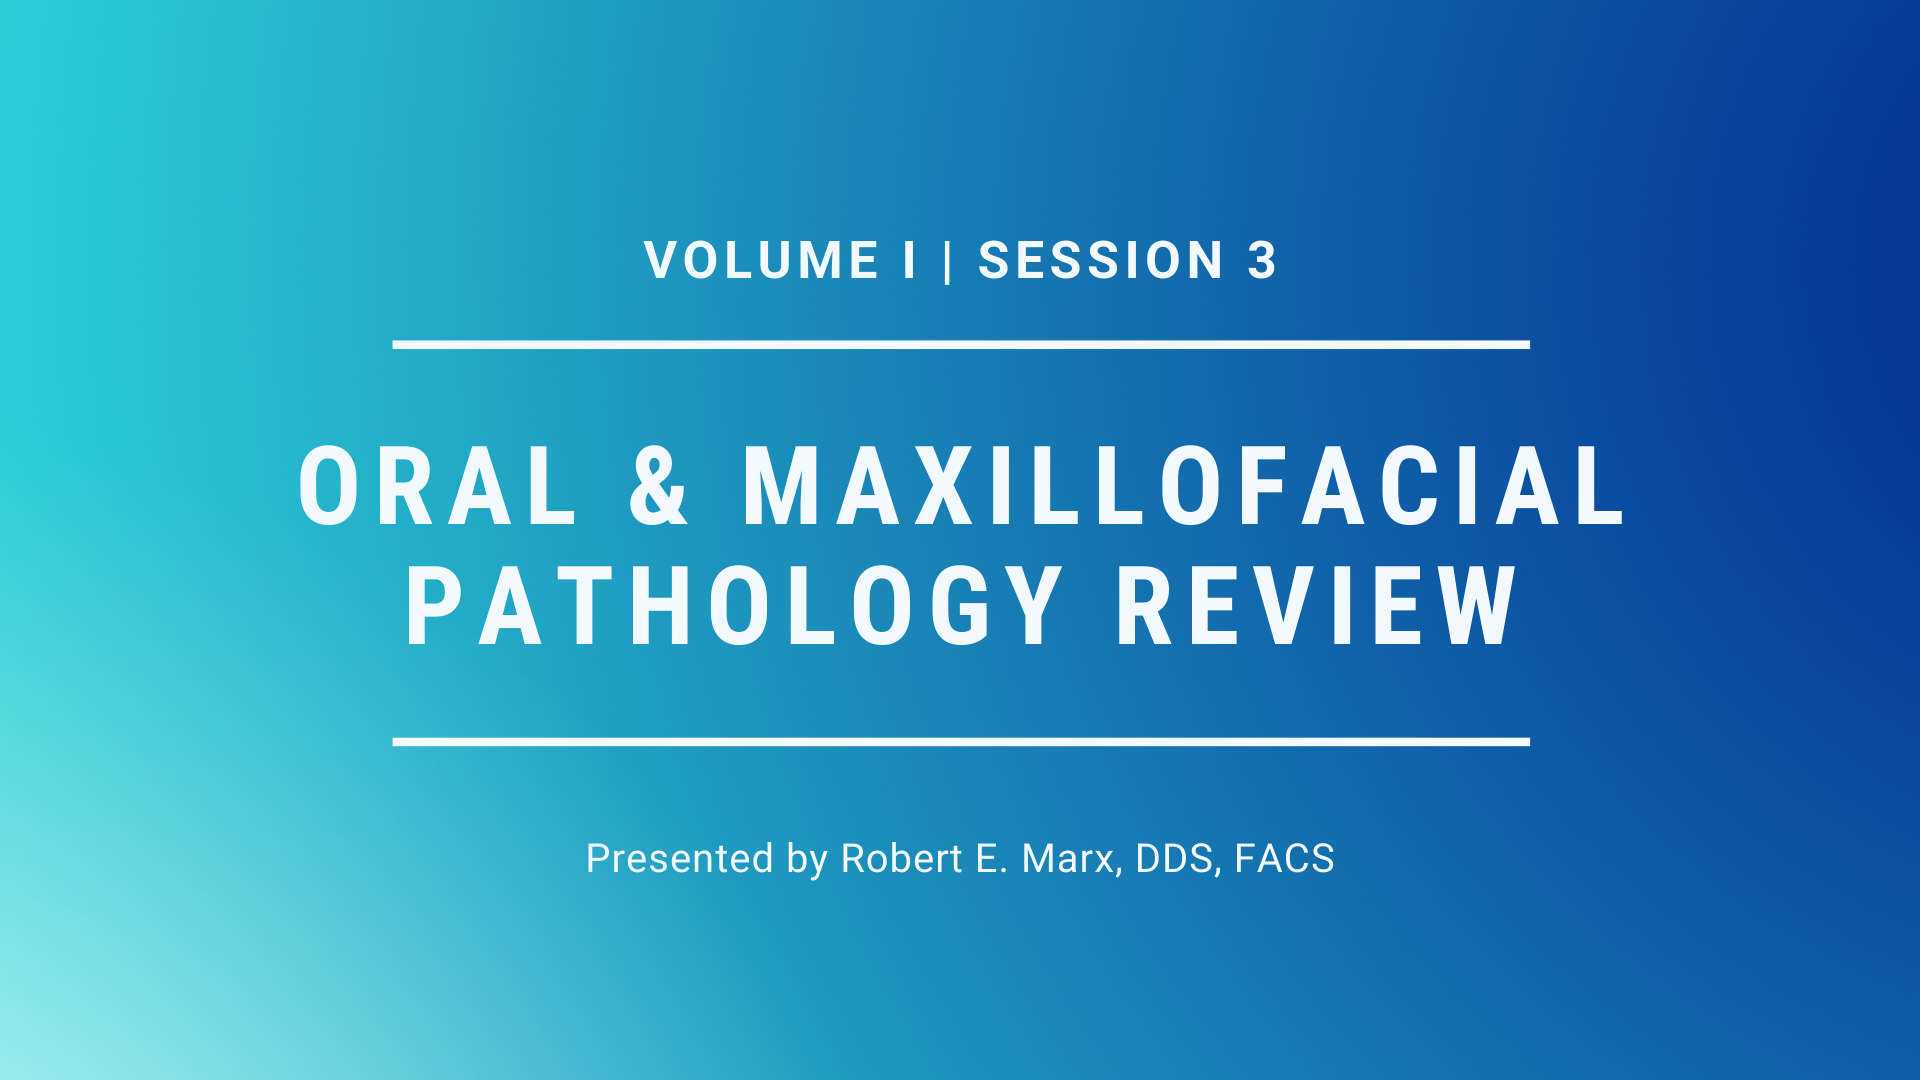 Oral & Maxillofacial Pathology Review – Volume I (OMFS) - Session 3